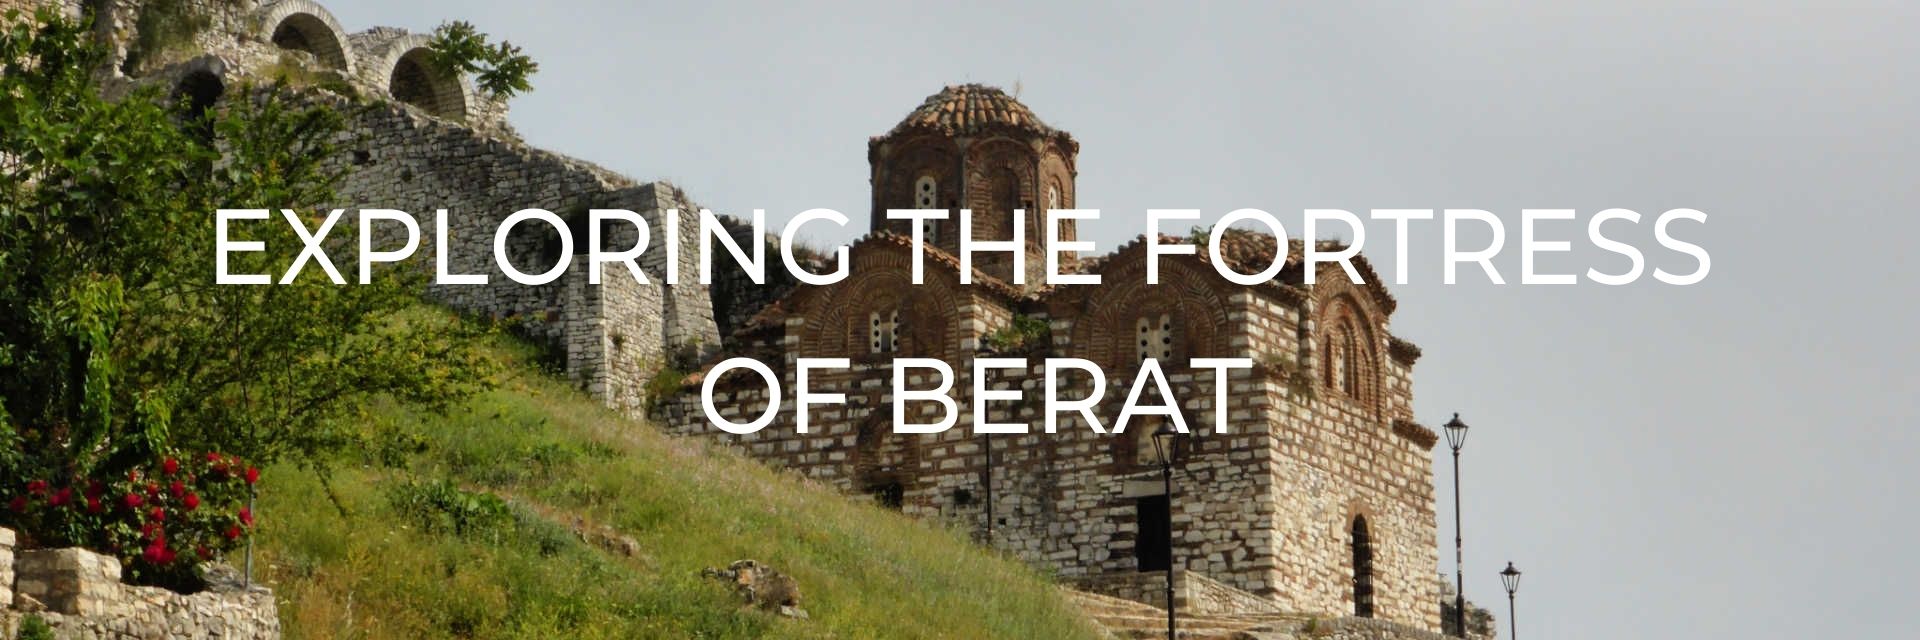 Exploring the Fortress of Berat, Albania Desktop Header